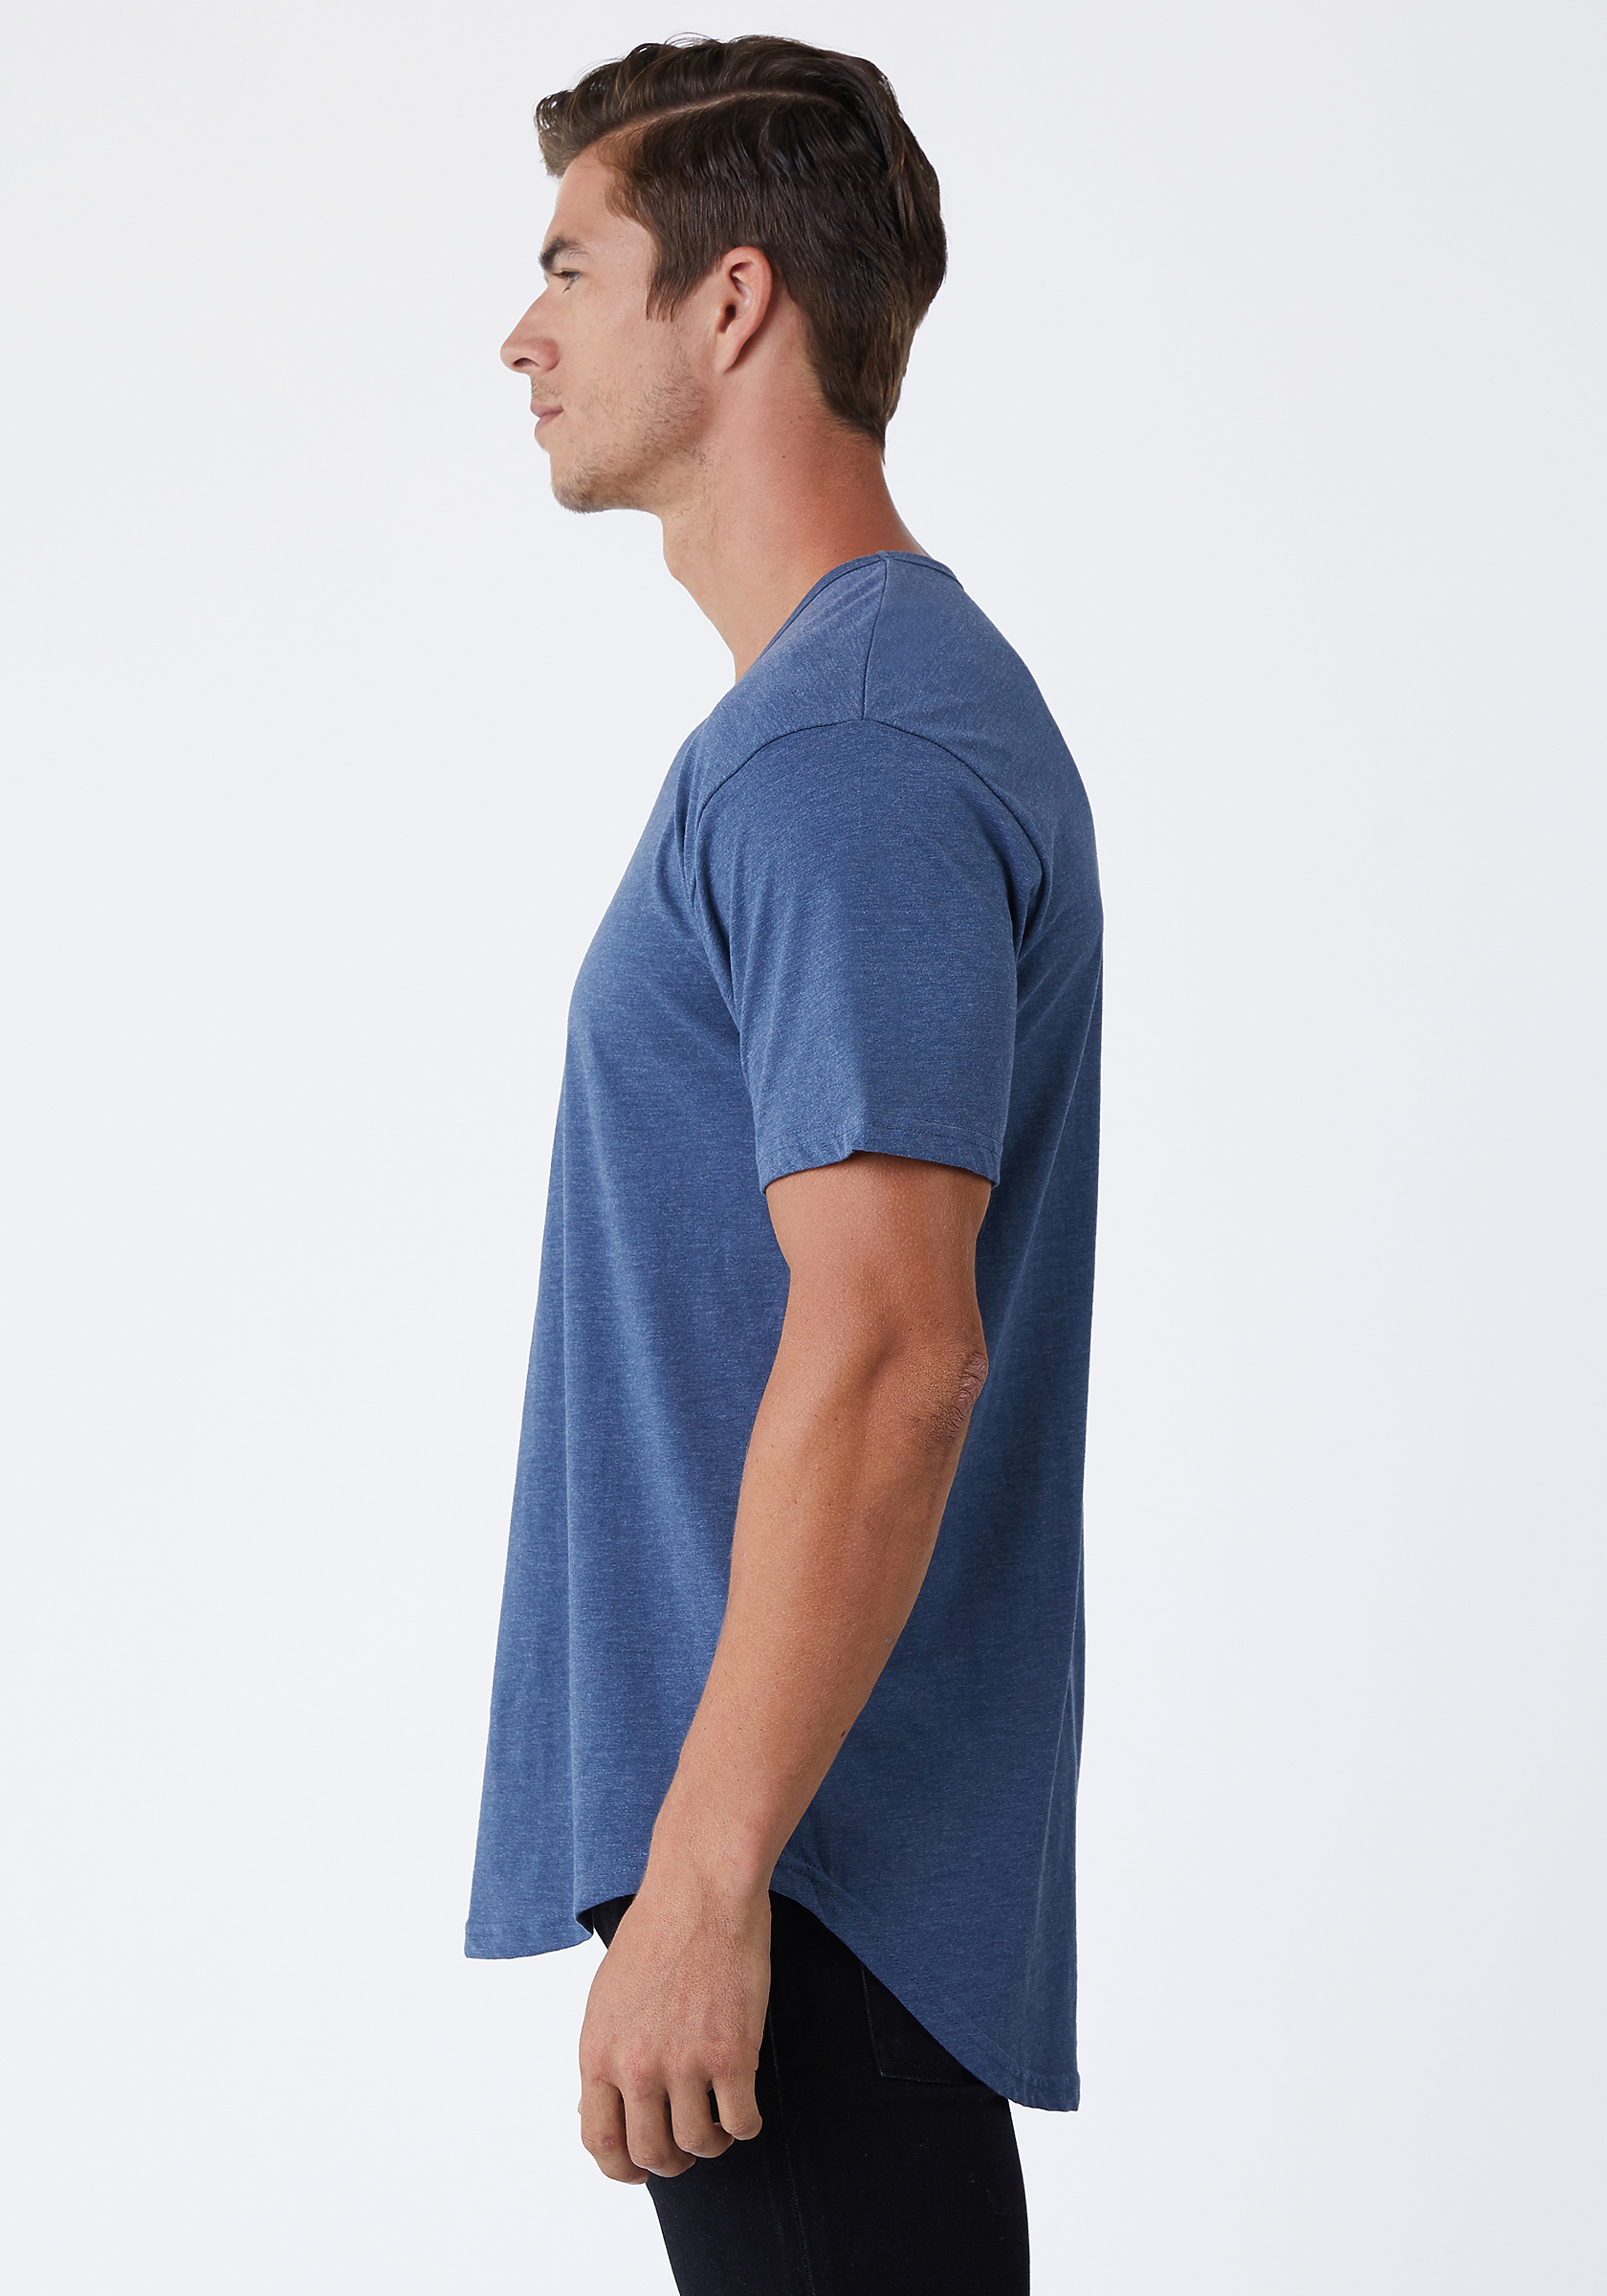 Throb Favor superstition Unisex Drop Tail T-Shirt | Cotton Heritage